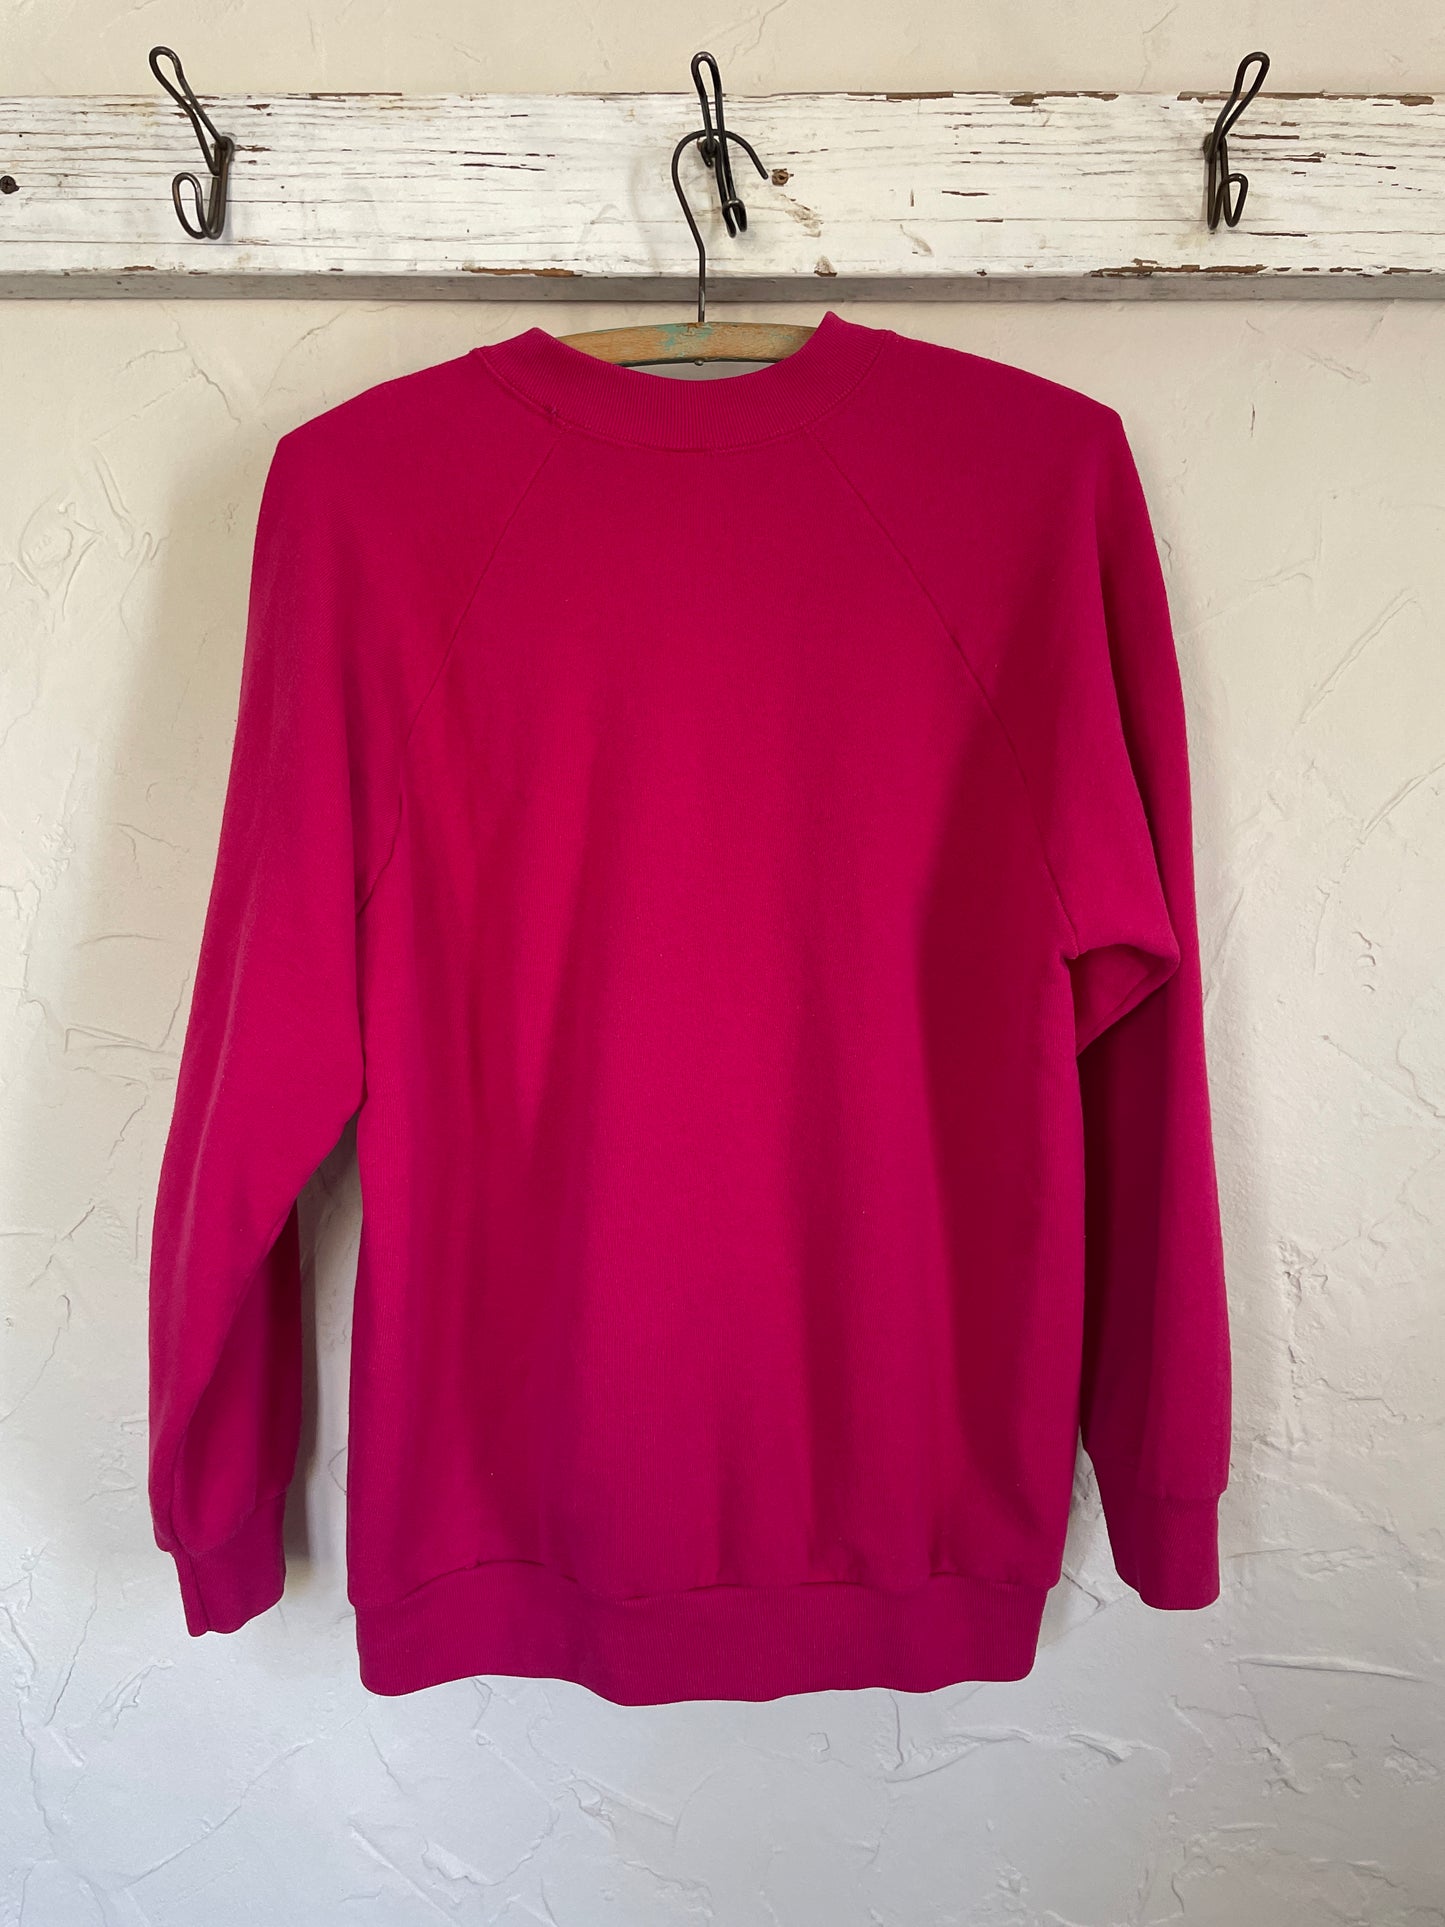 90s Bright Pink Sweatshirt